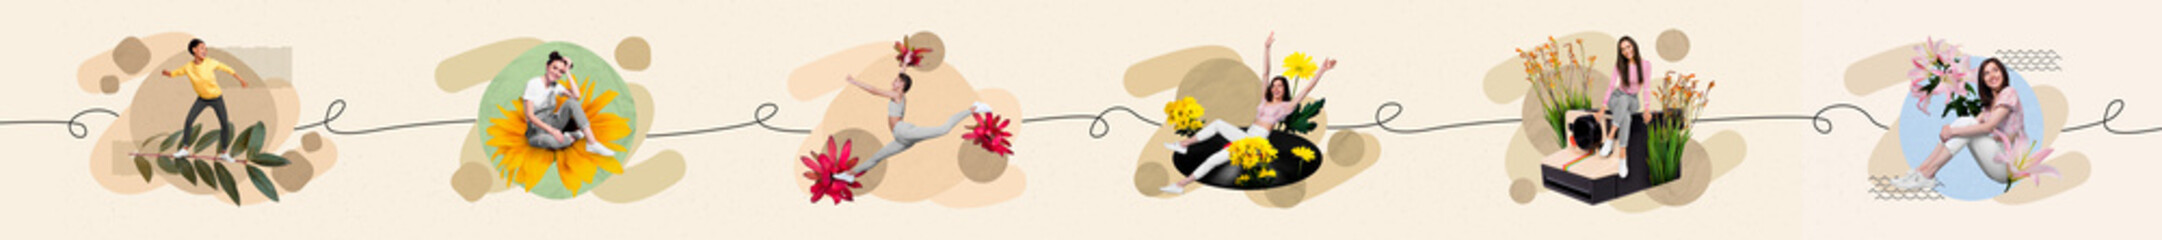 Creative retro 3d magazine collage image of smiling ladies celebrating 14 february getting flowers isolated painting background